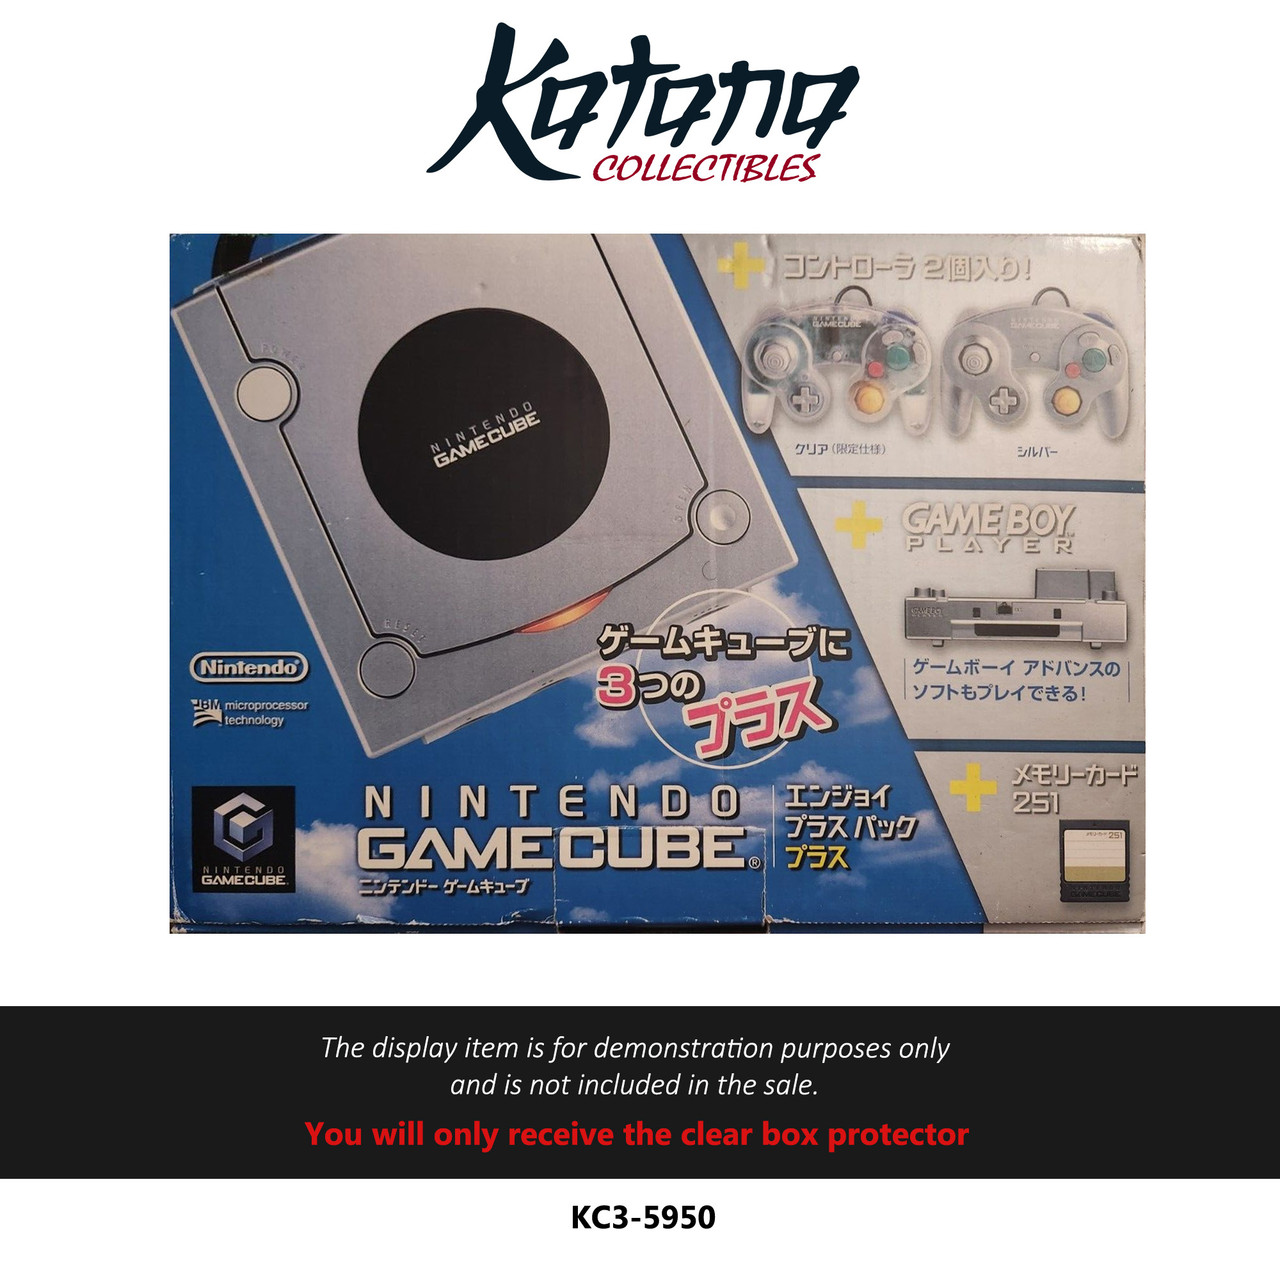 Katana Collectibles Protector For Nintendo Gamecube Console - Japanese Version